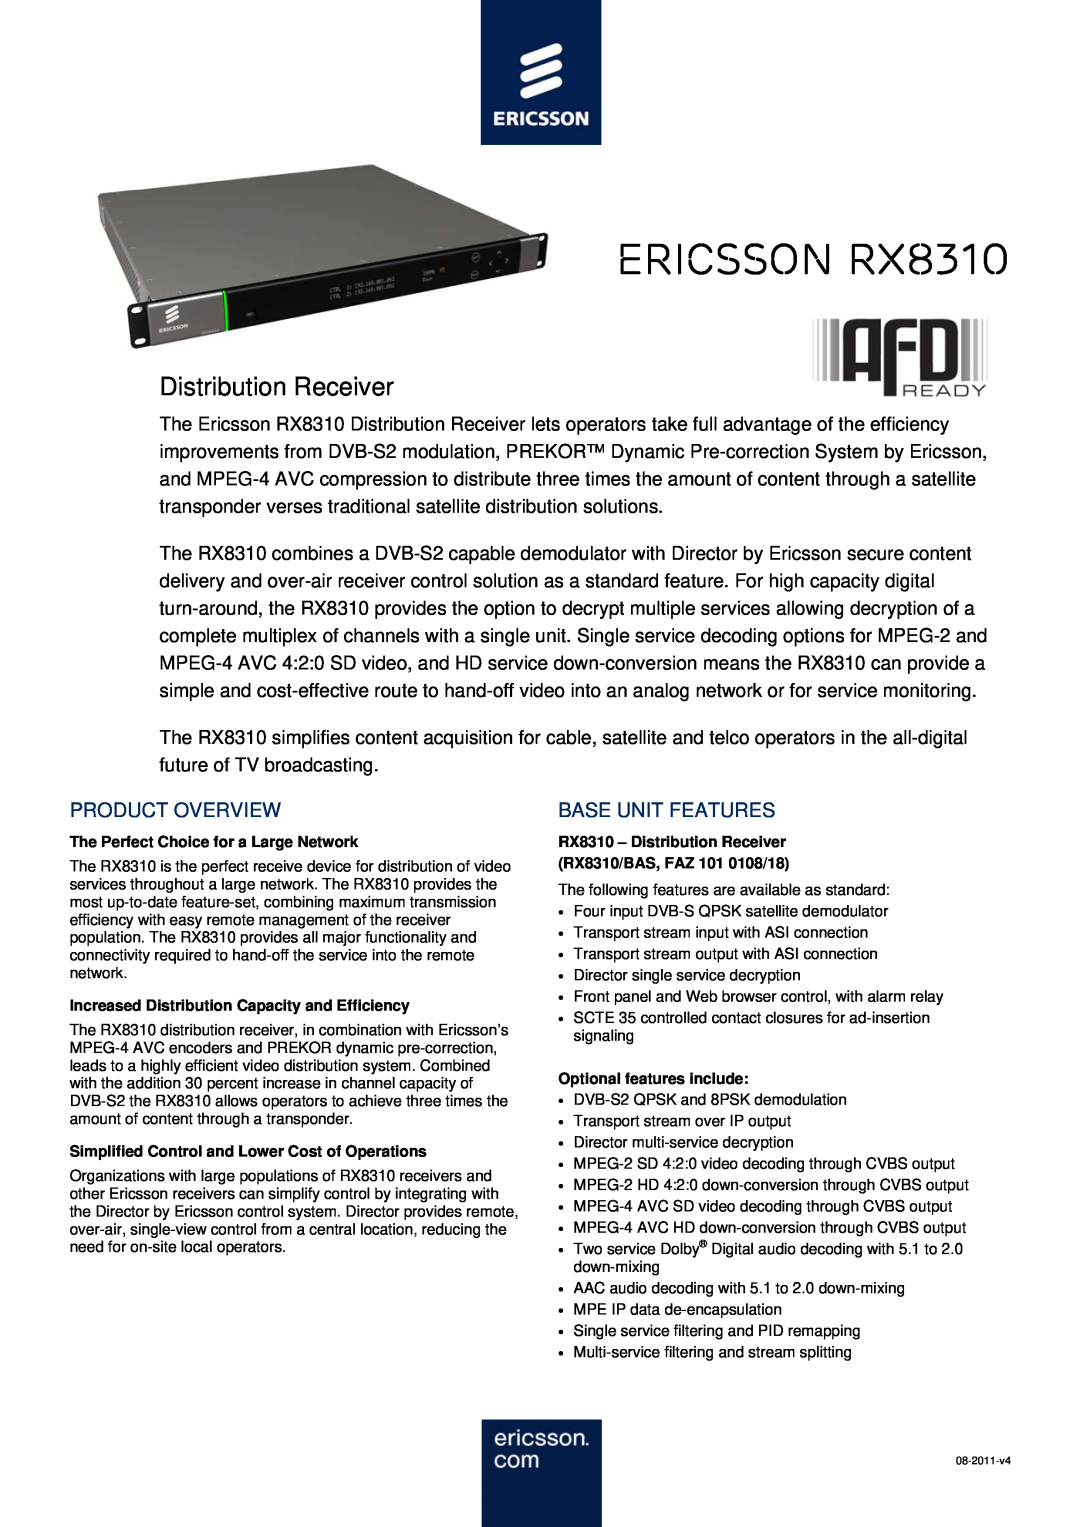 Ericsson manual Product Overview, Base Unit Features, Ericsson RX8310, Distribution Receiver 